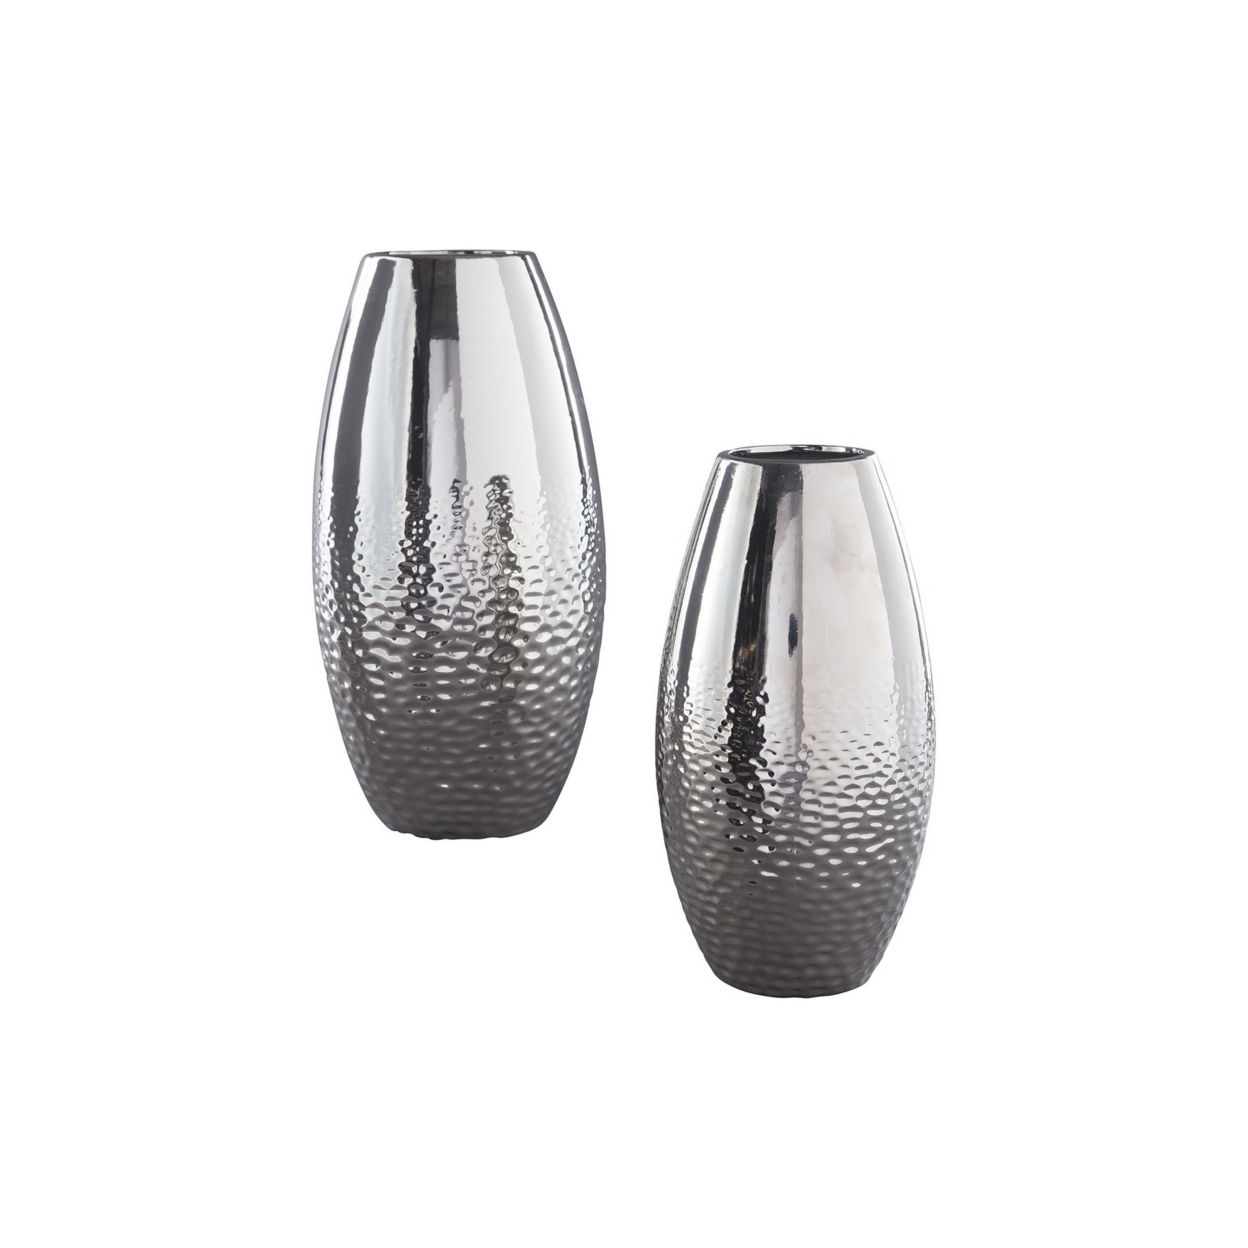 Ceramic Vase With Textured Ripple Design, Set Of 2, Silver- Saltoro Sherpi